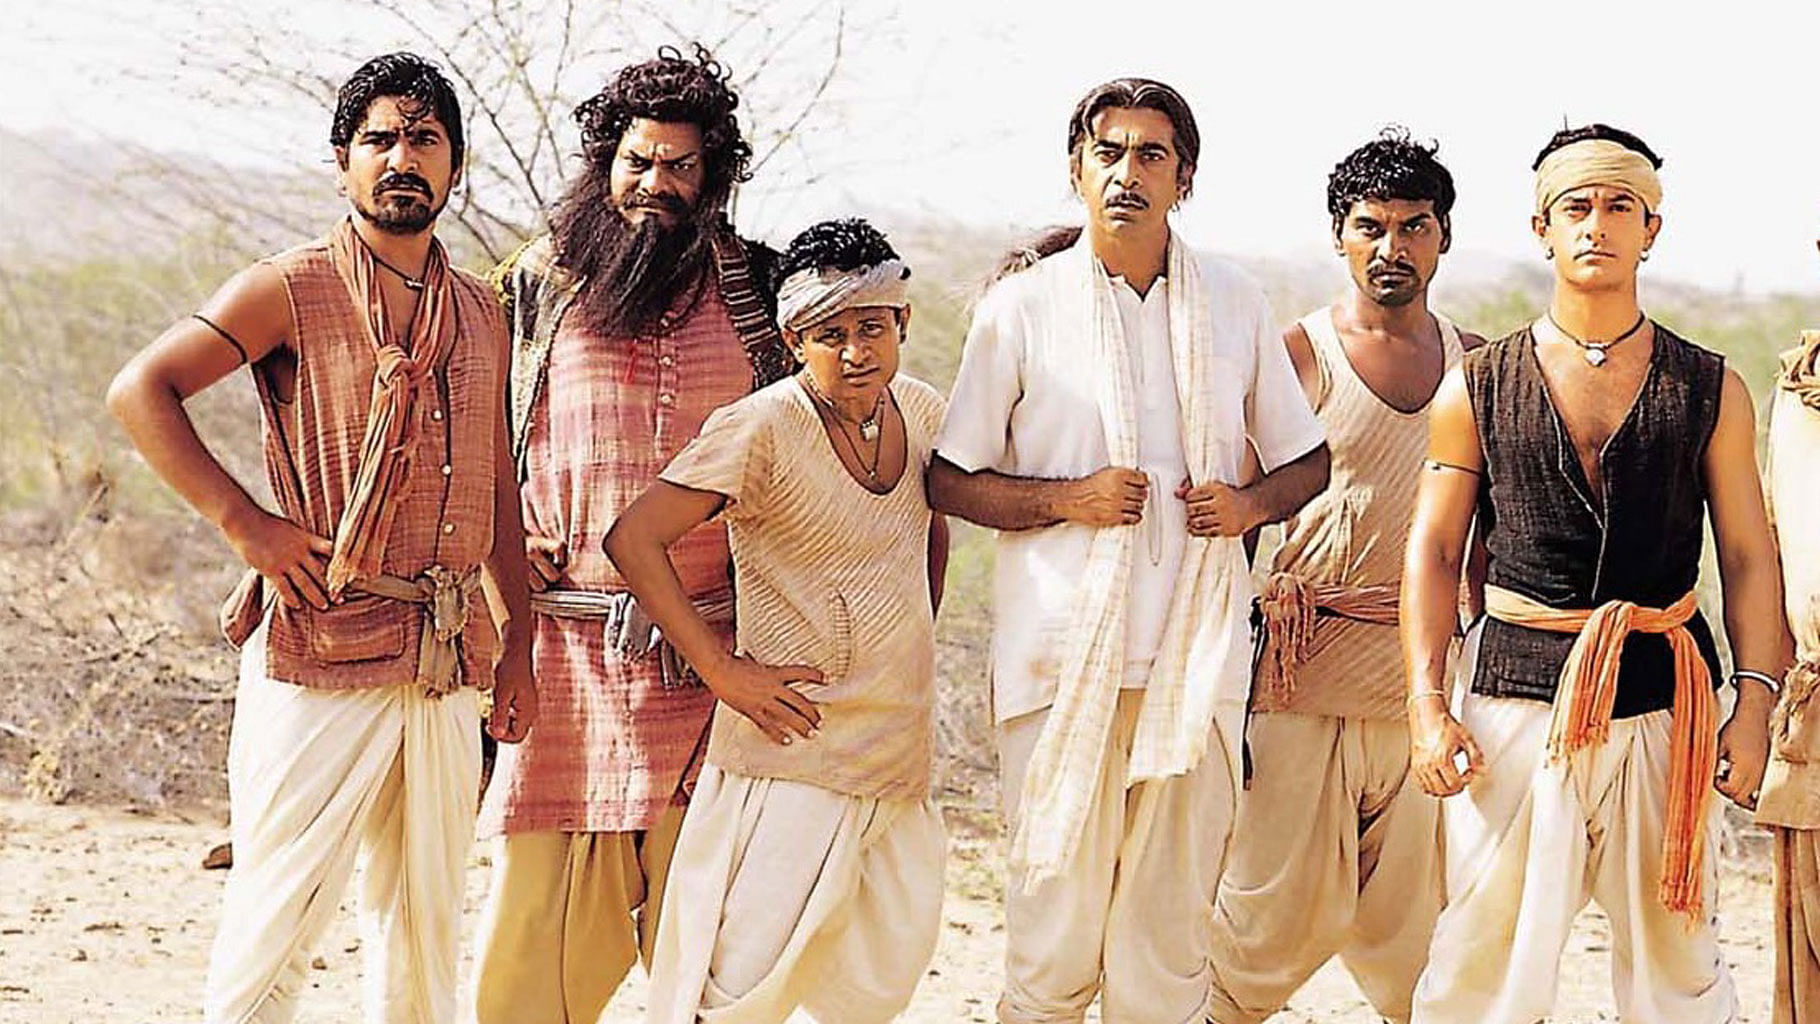 Rajesh Vivek (second from left) as Guran in <i>Lagaan</i>